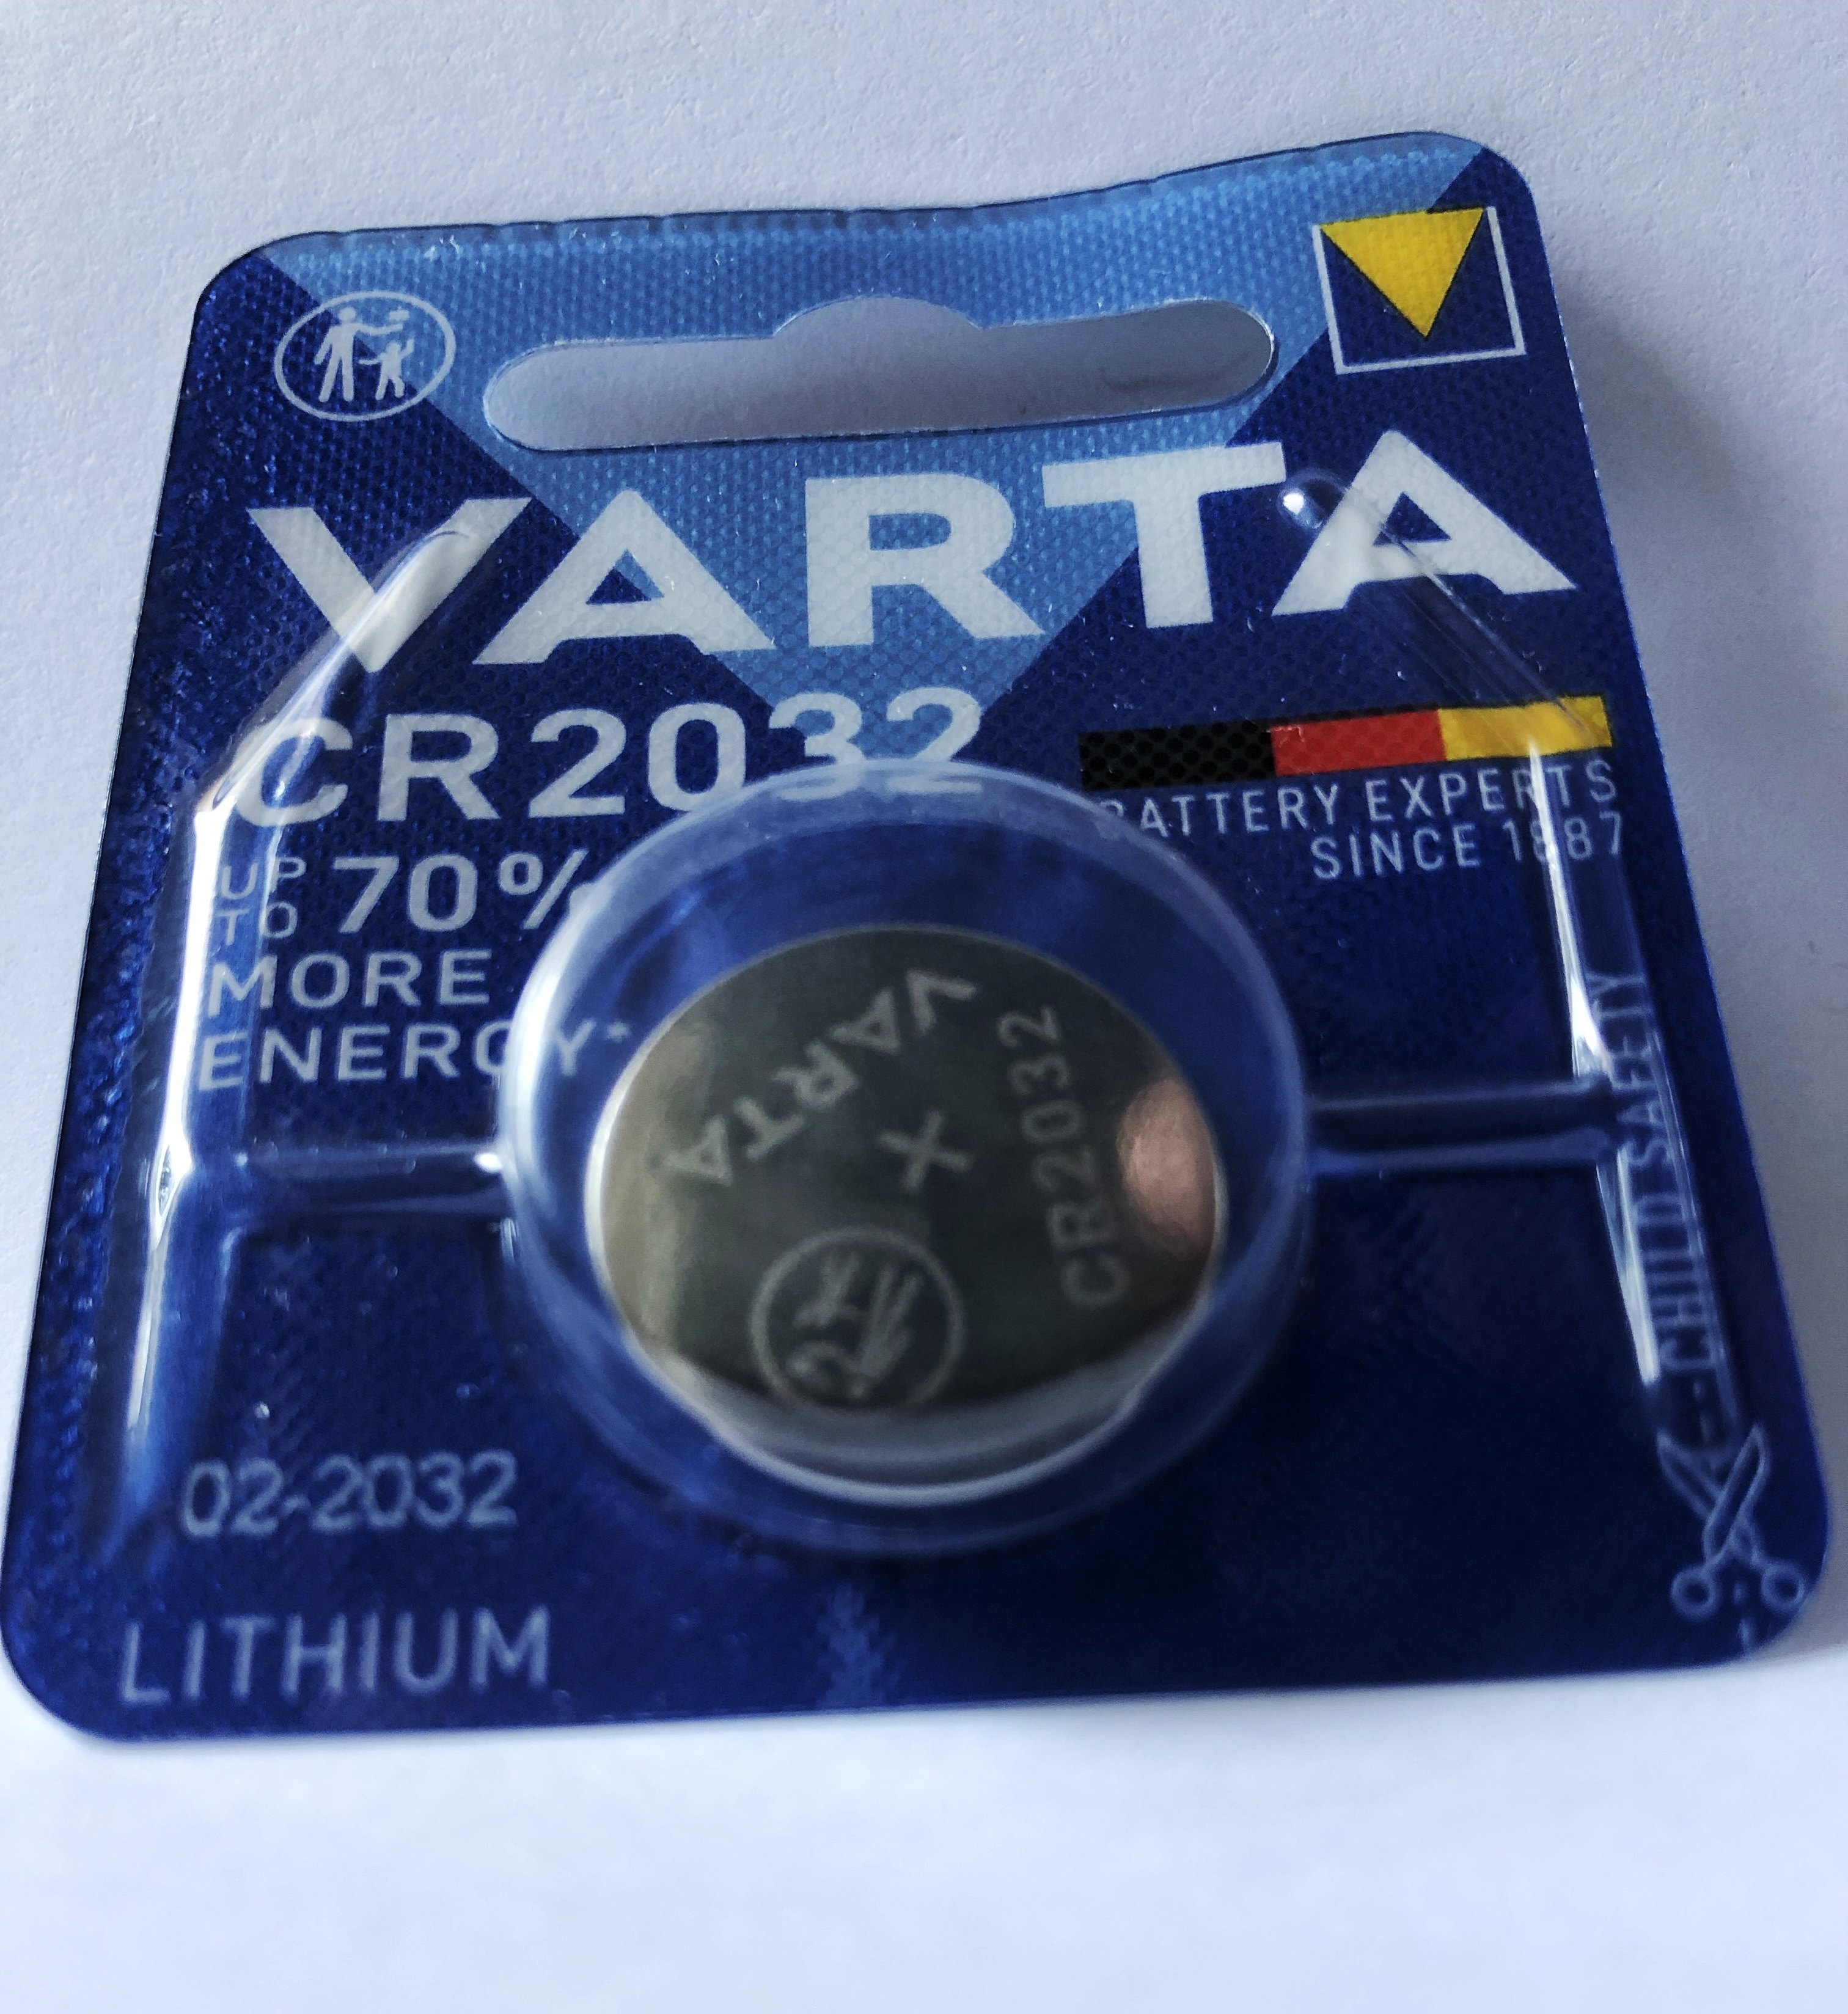 Батарейка Varta CR 2032 BLI 1 Lithium